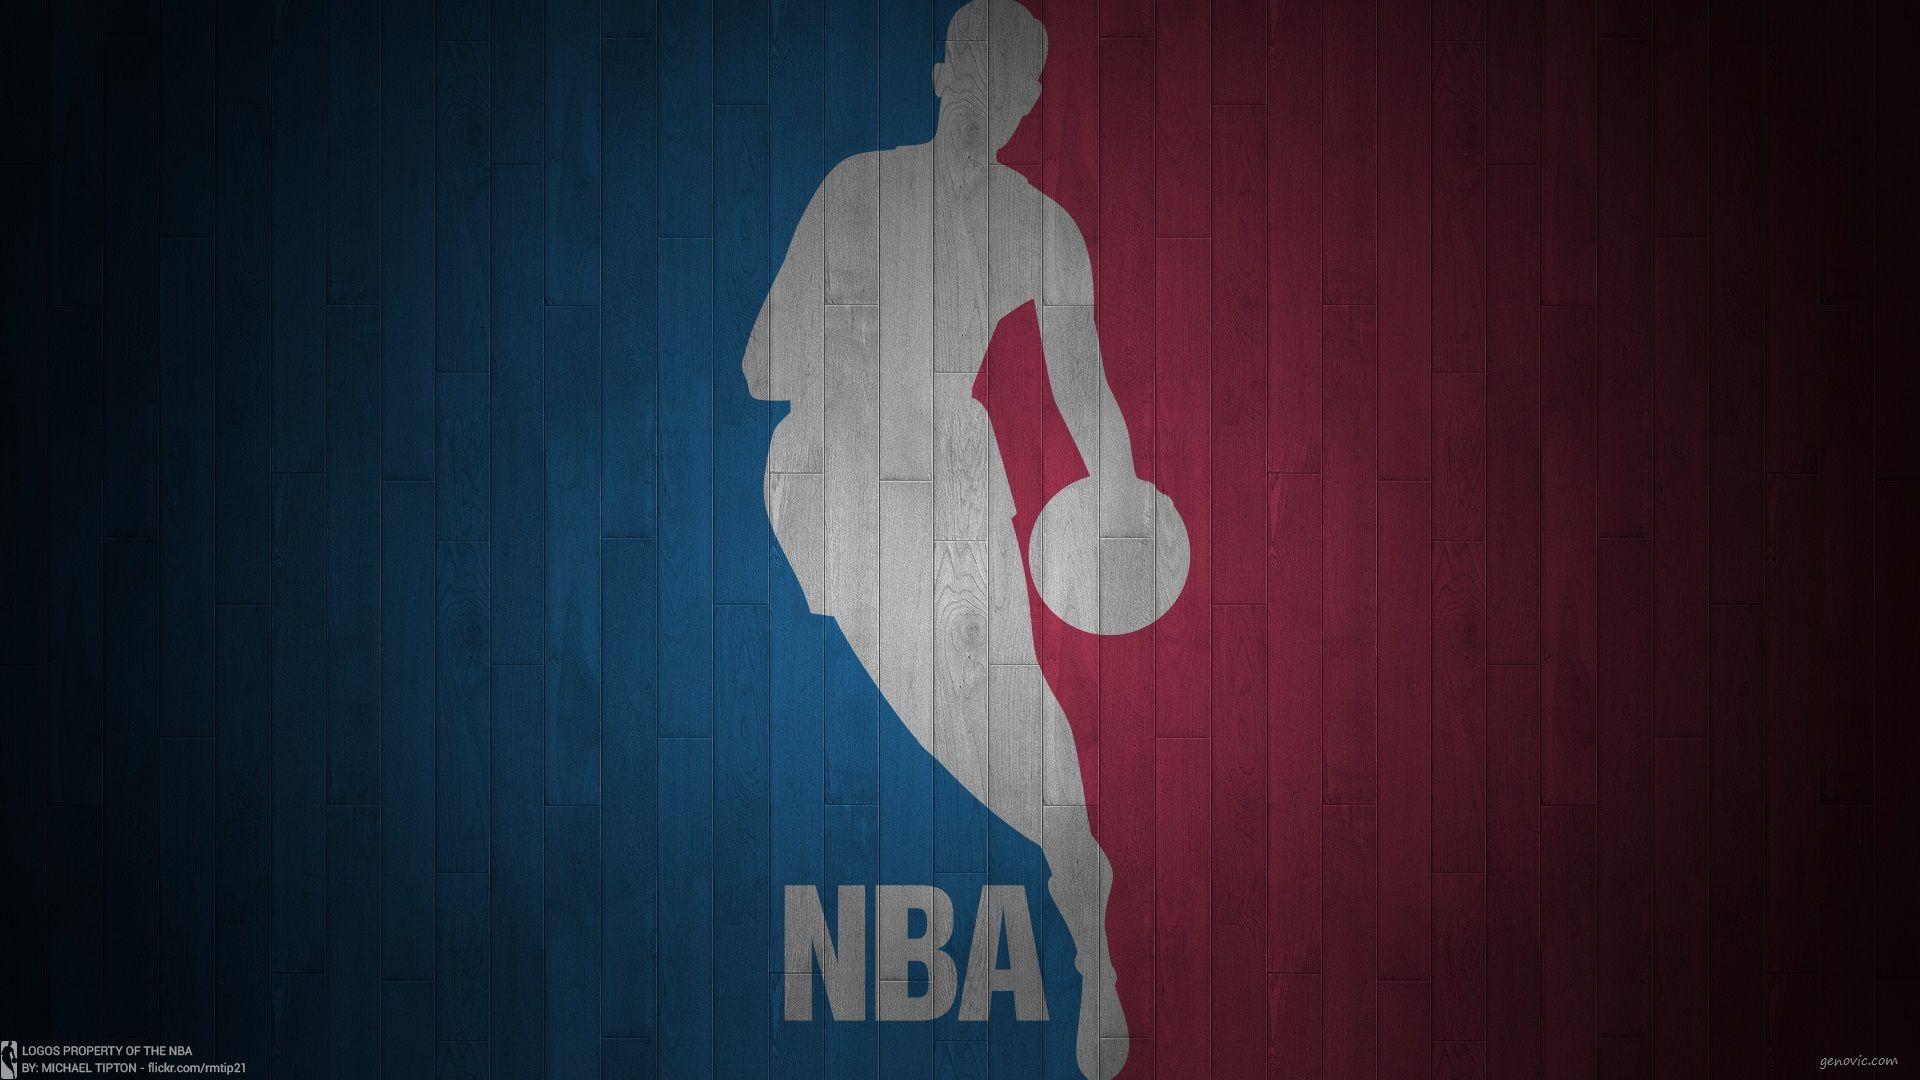 Image for NBA Wallpaper HD Logo. GuhPix Gallery